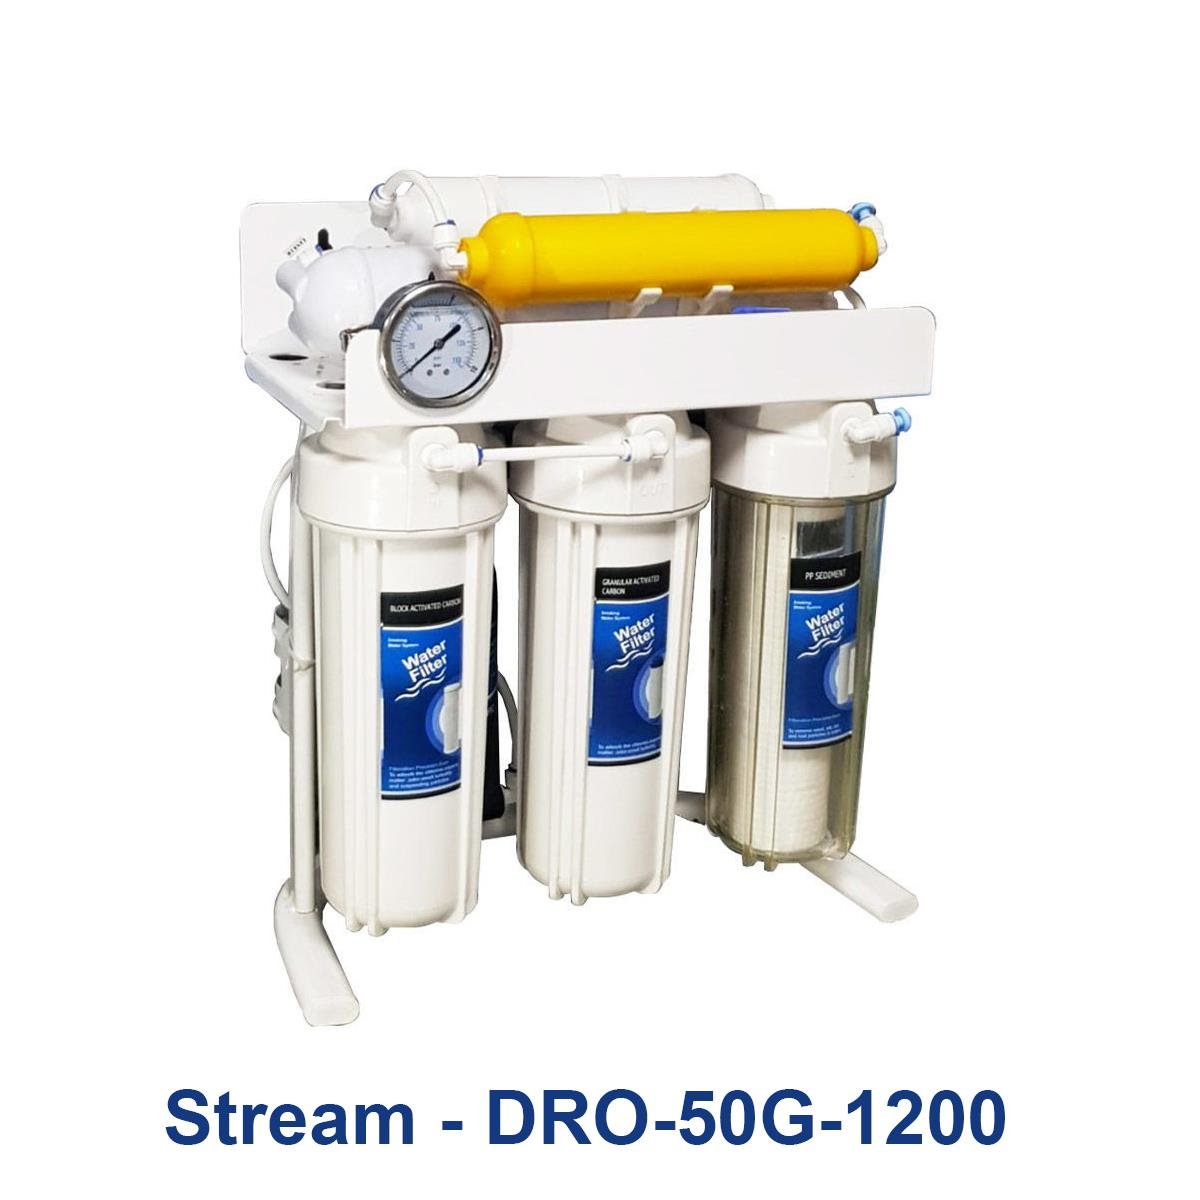 Stream---DRO-50G-1200